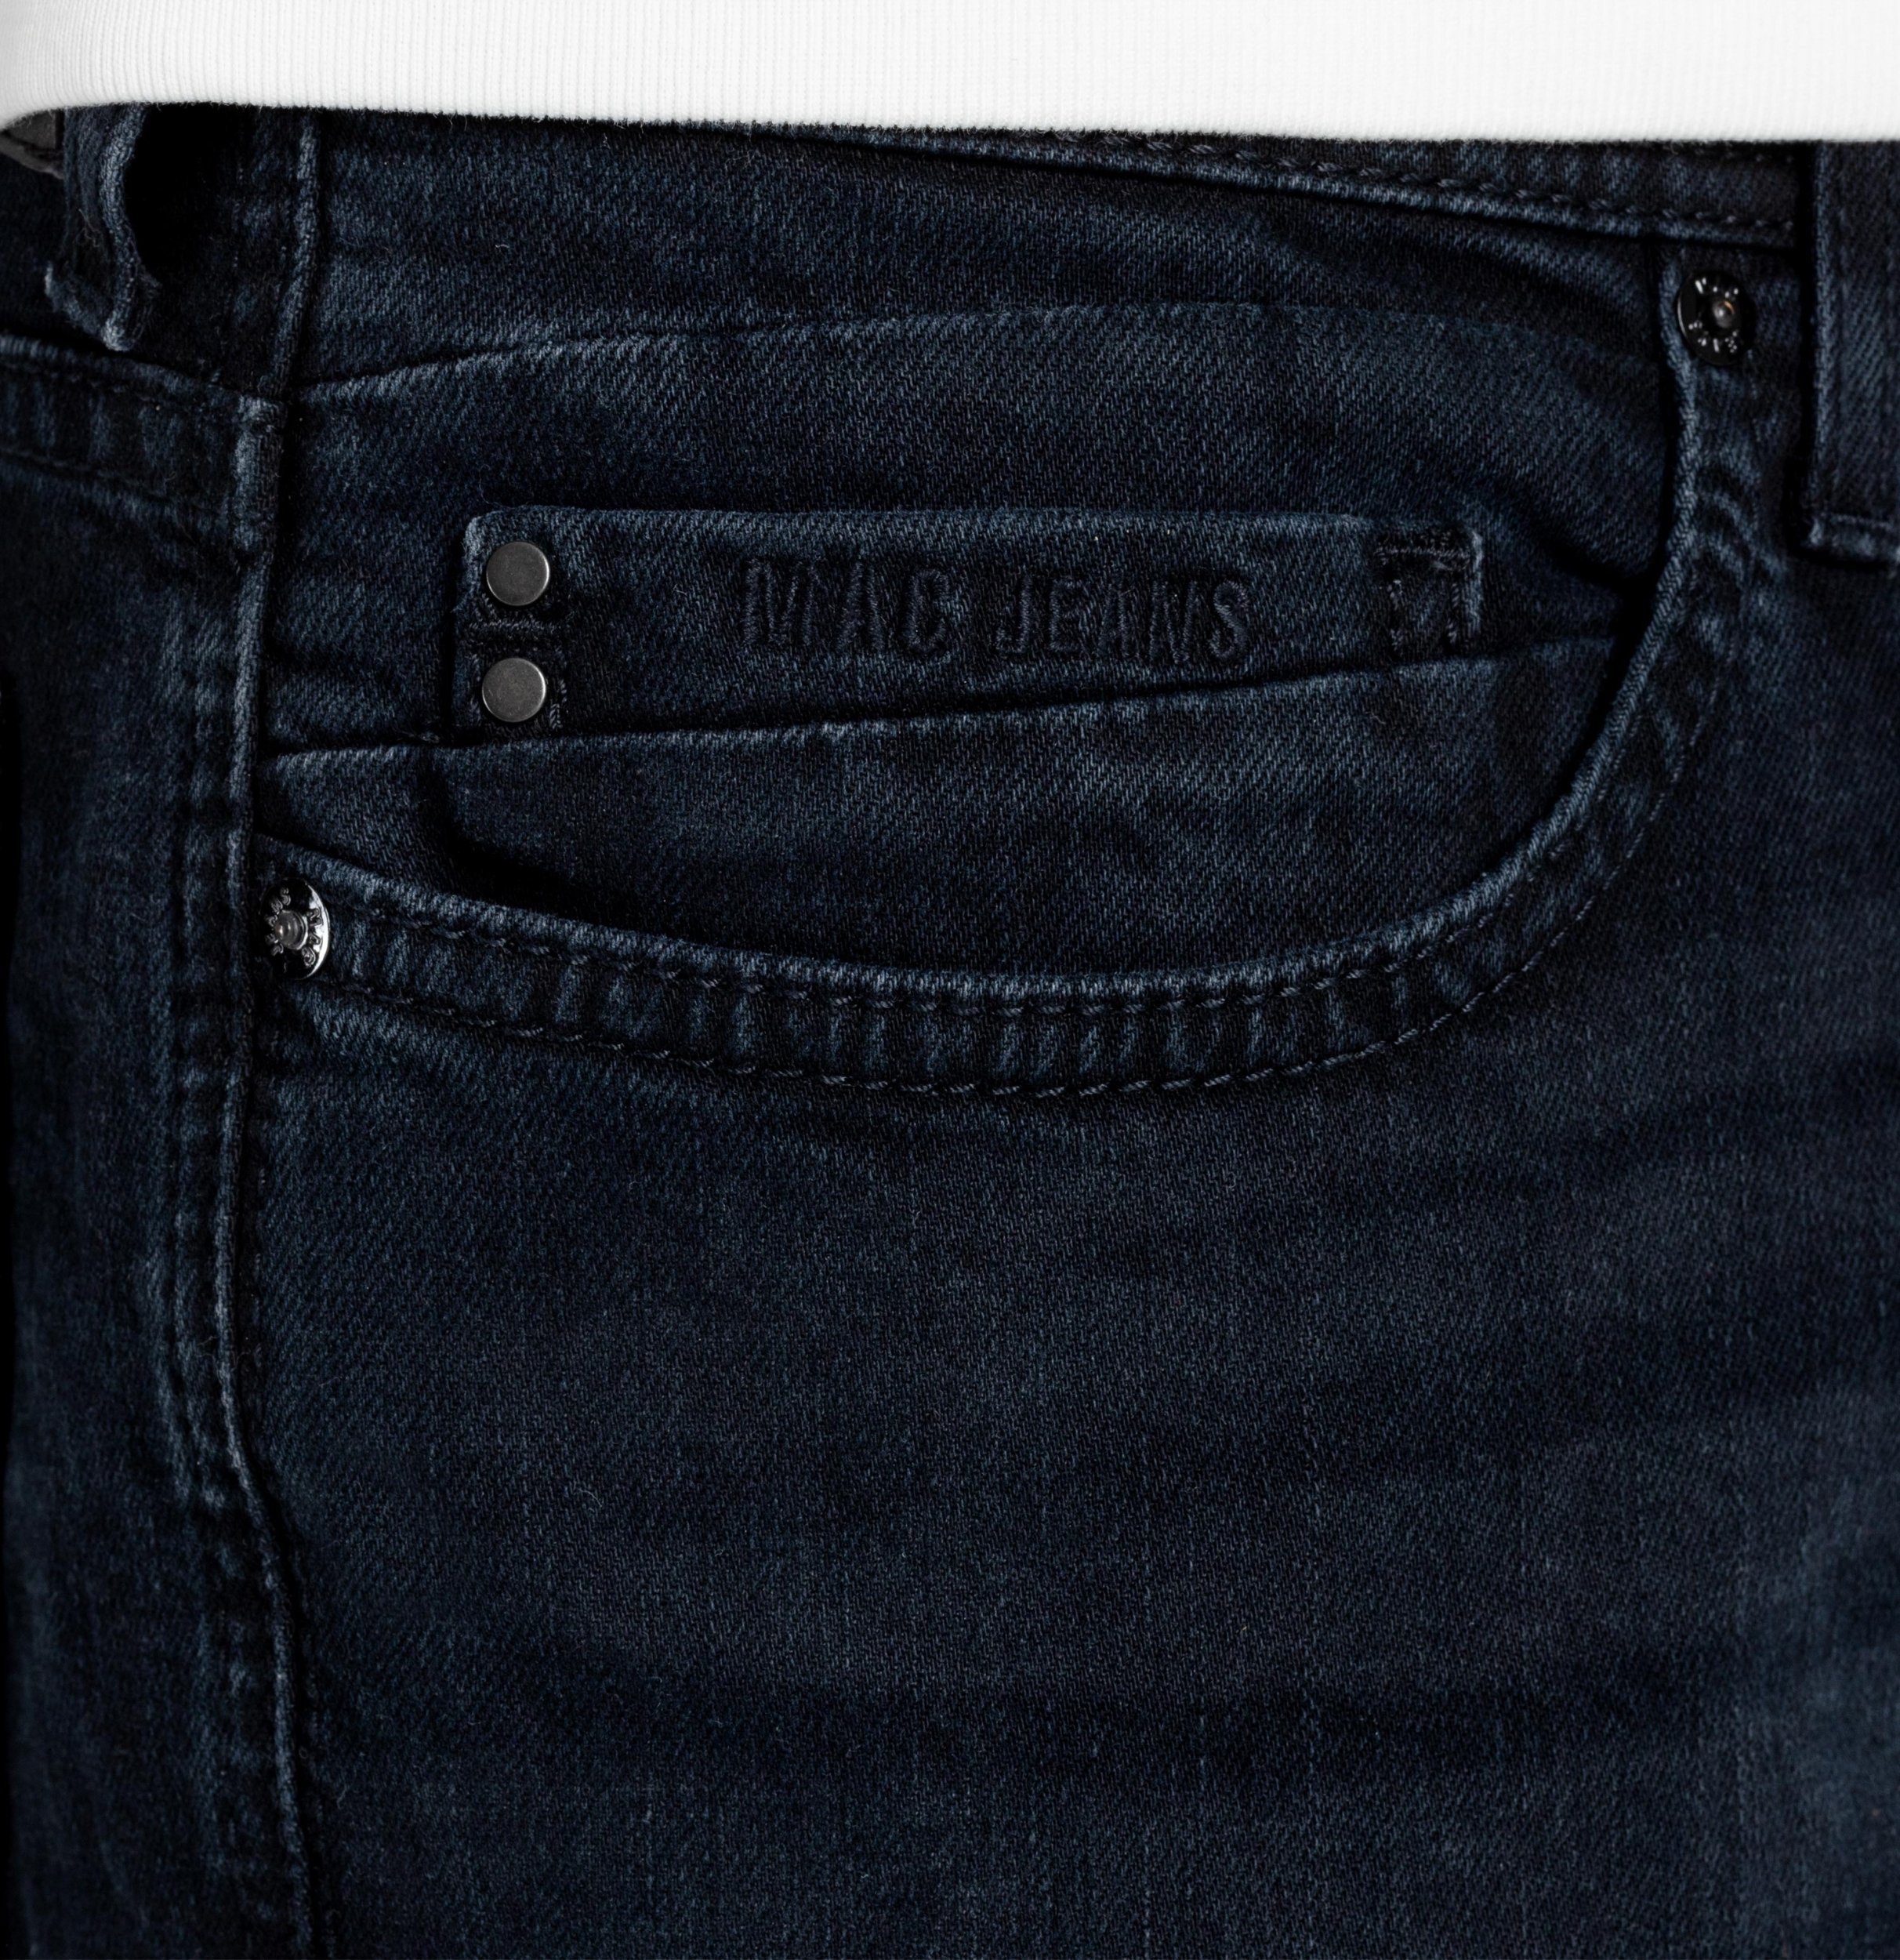 authentic black MAC 5-Pocket-Jeans black used Ben H894